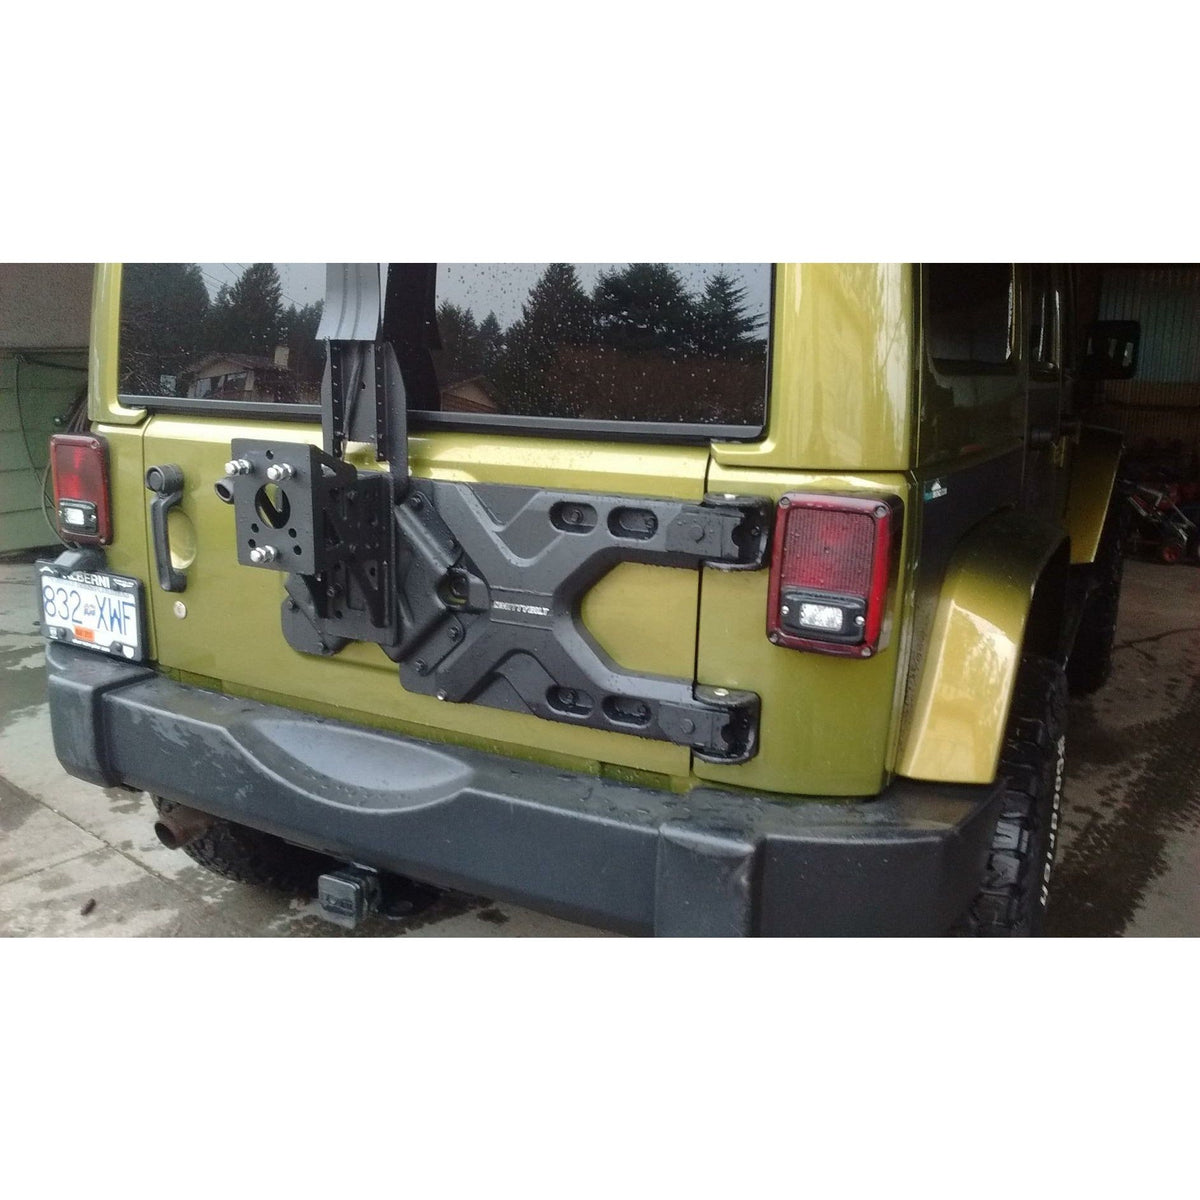 Smittybilt 2843 Pivot HD Oversize Tire Carrier for 2007-2018 Jeep Wrangler JK | Black - Truck Accessories Guy